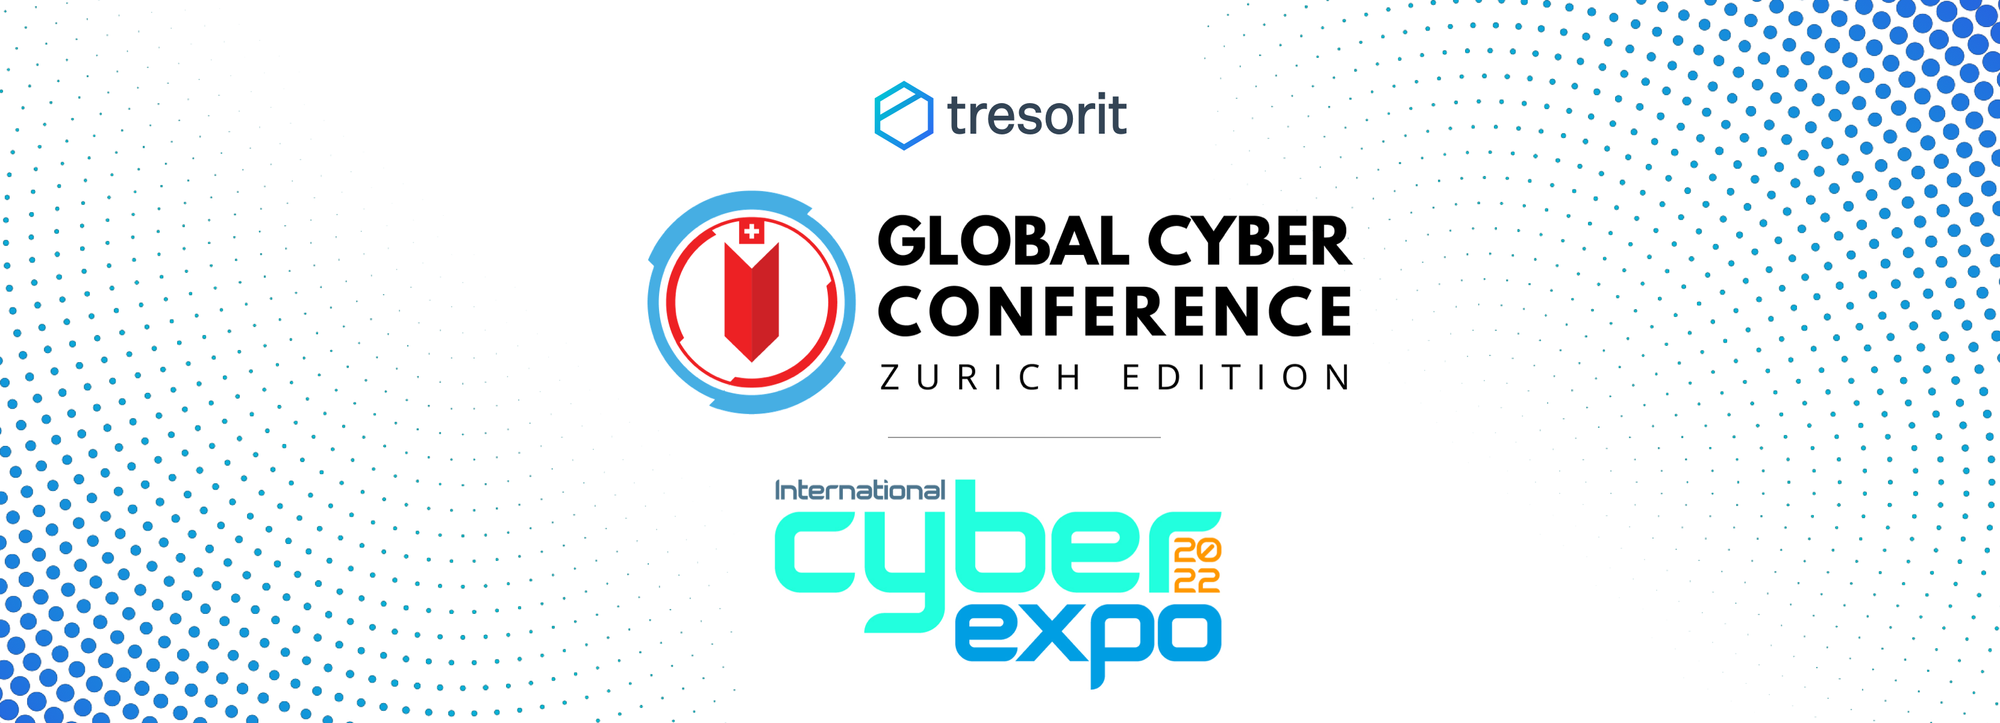 Logos von Tresorit, Global Cyber Conference und International Cyber Expo